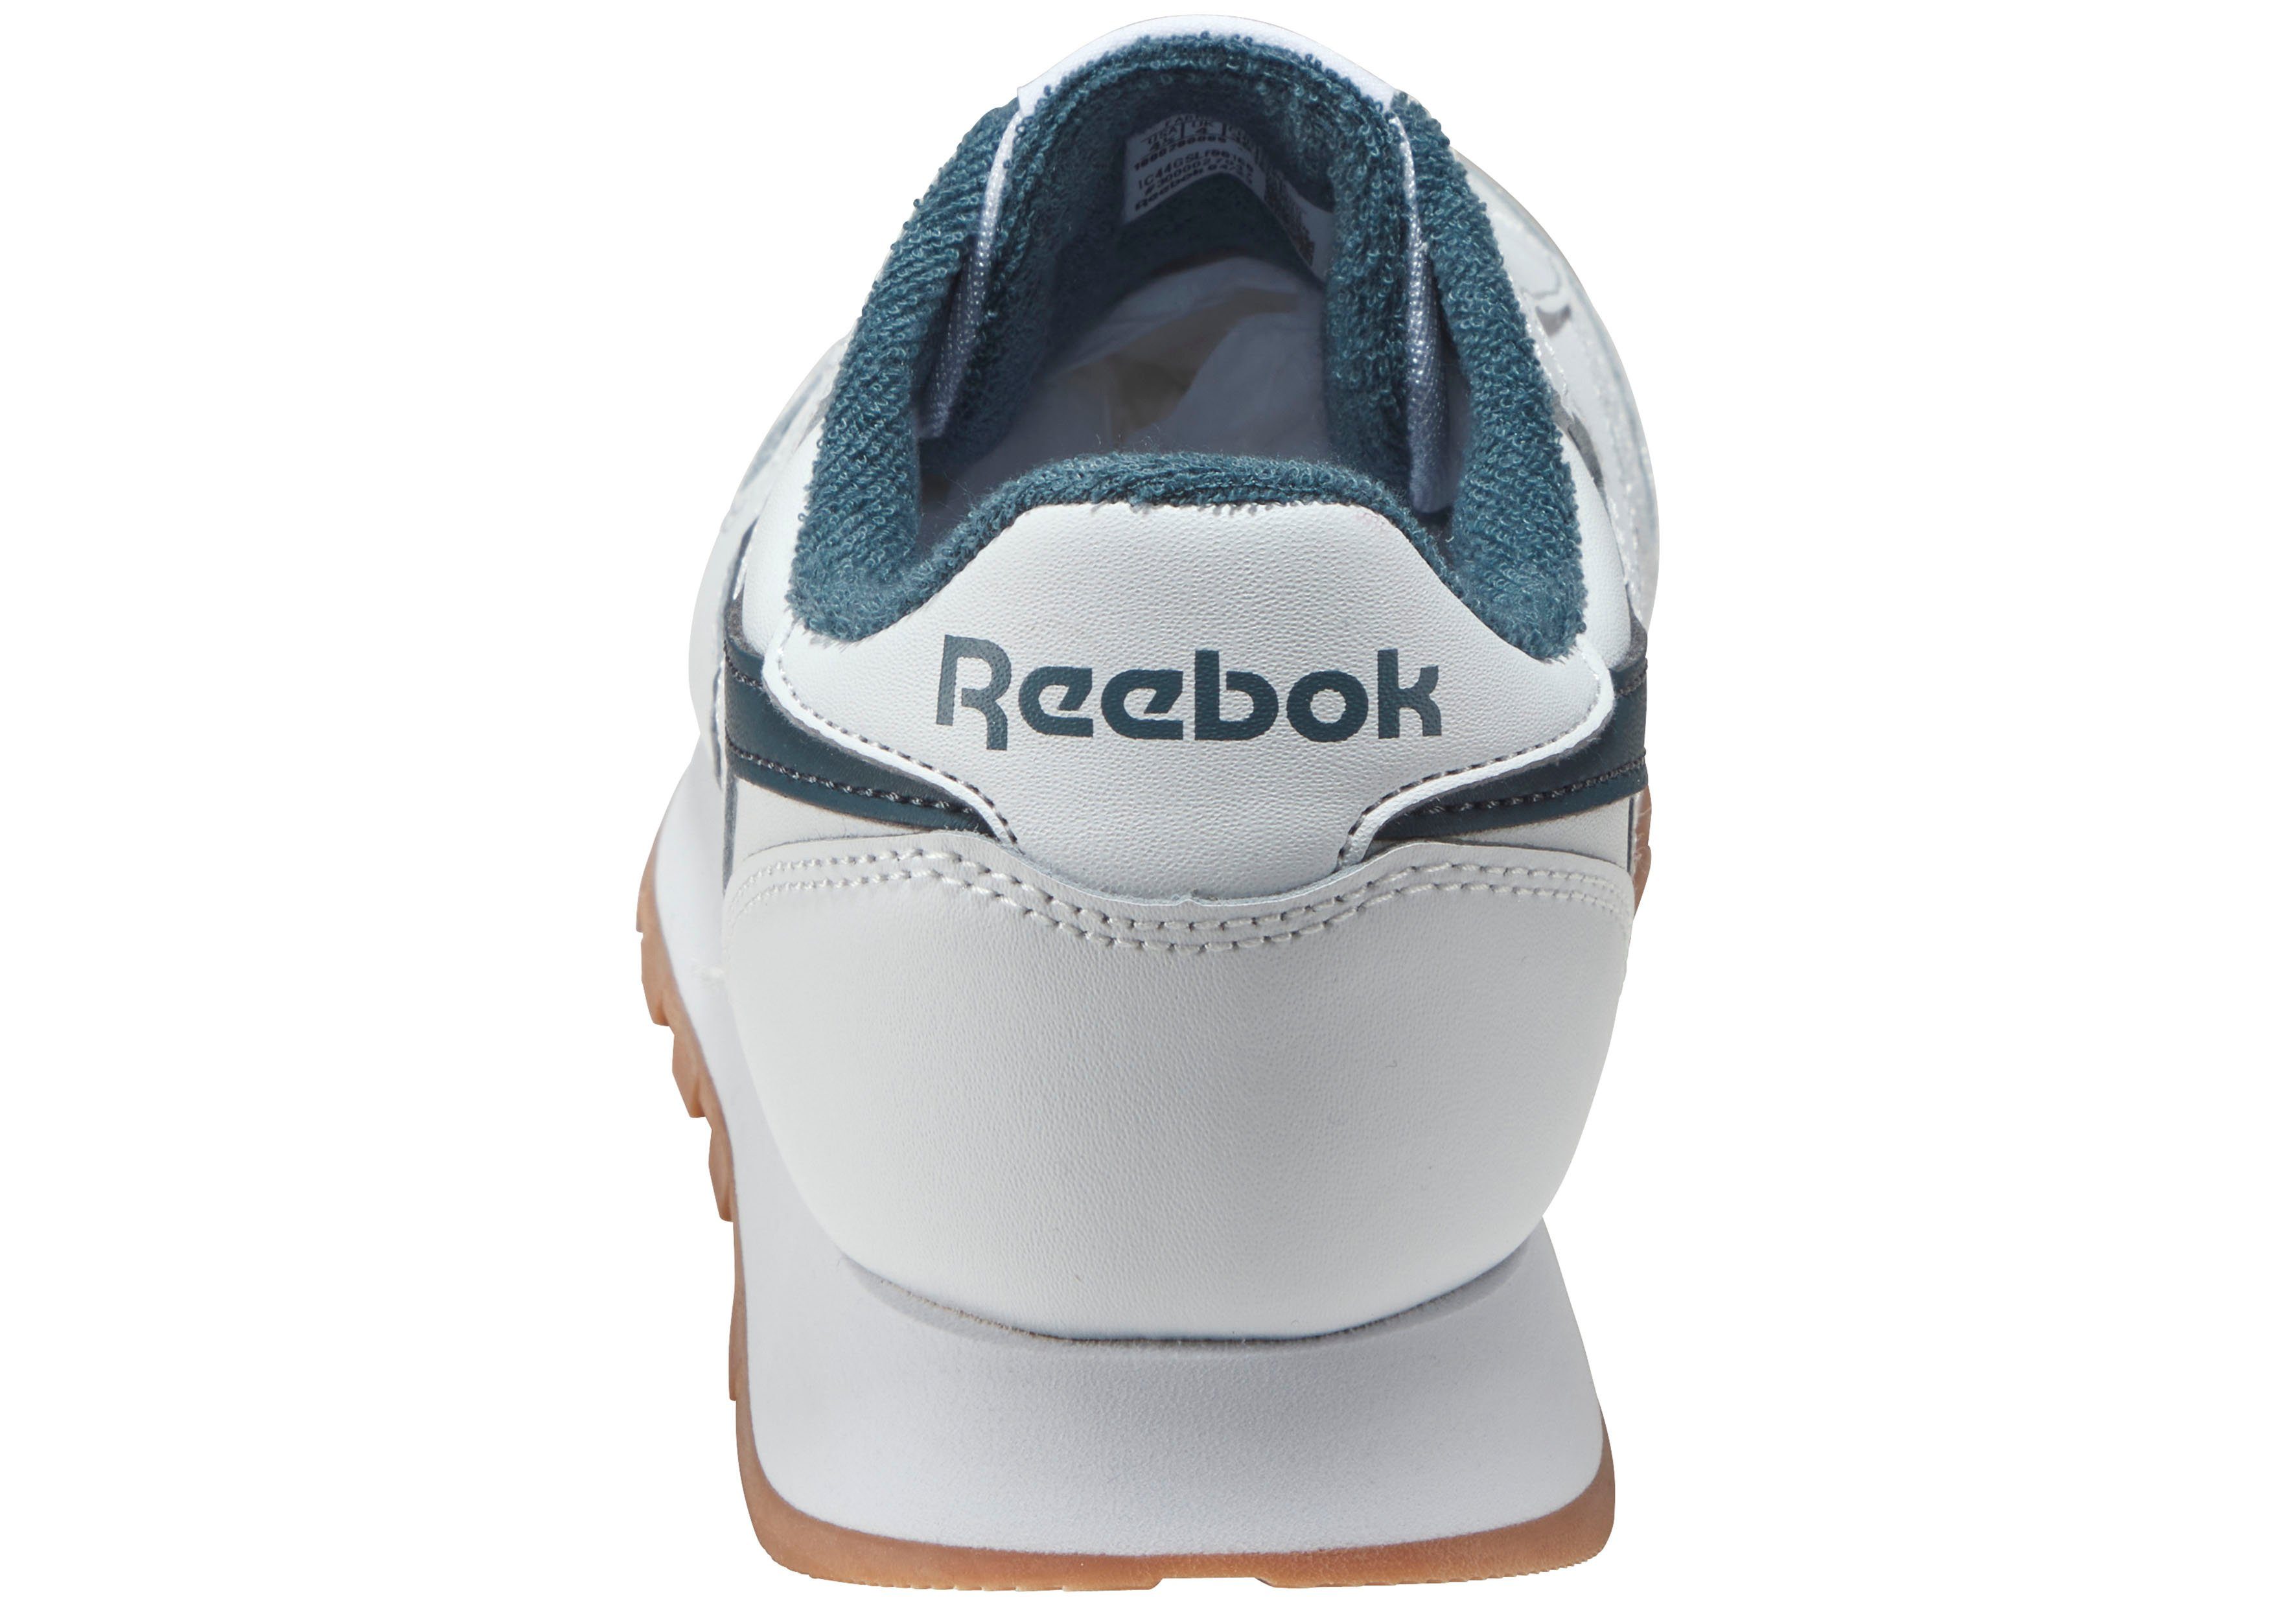 Reebok Sneaker weiß-blau CLASSIC Classic LEATHER